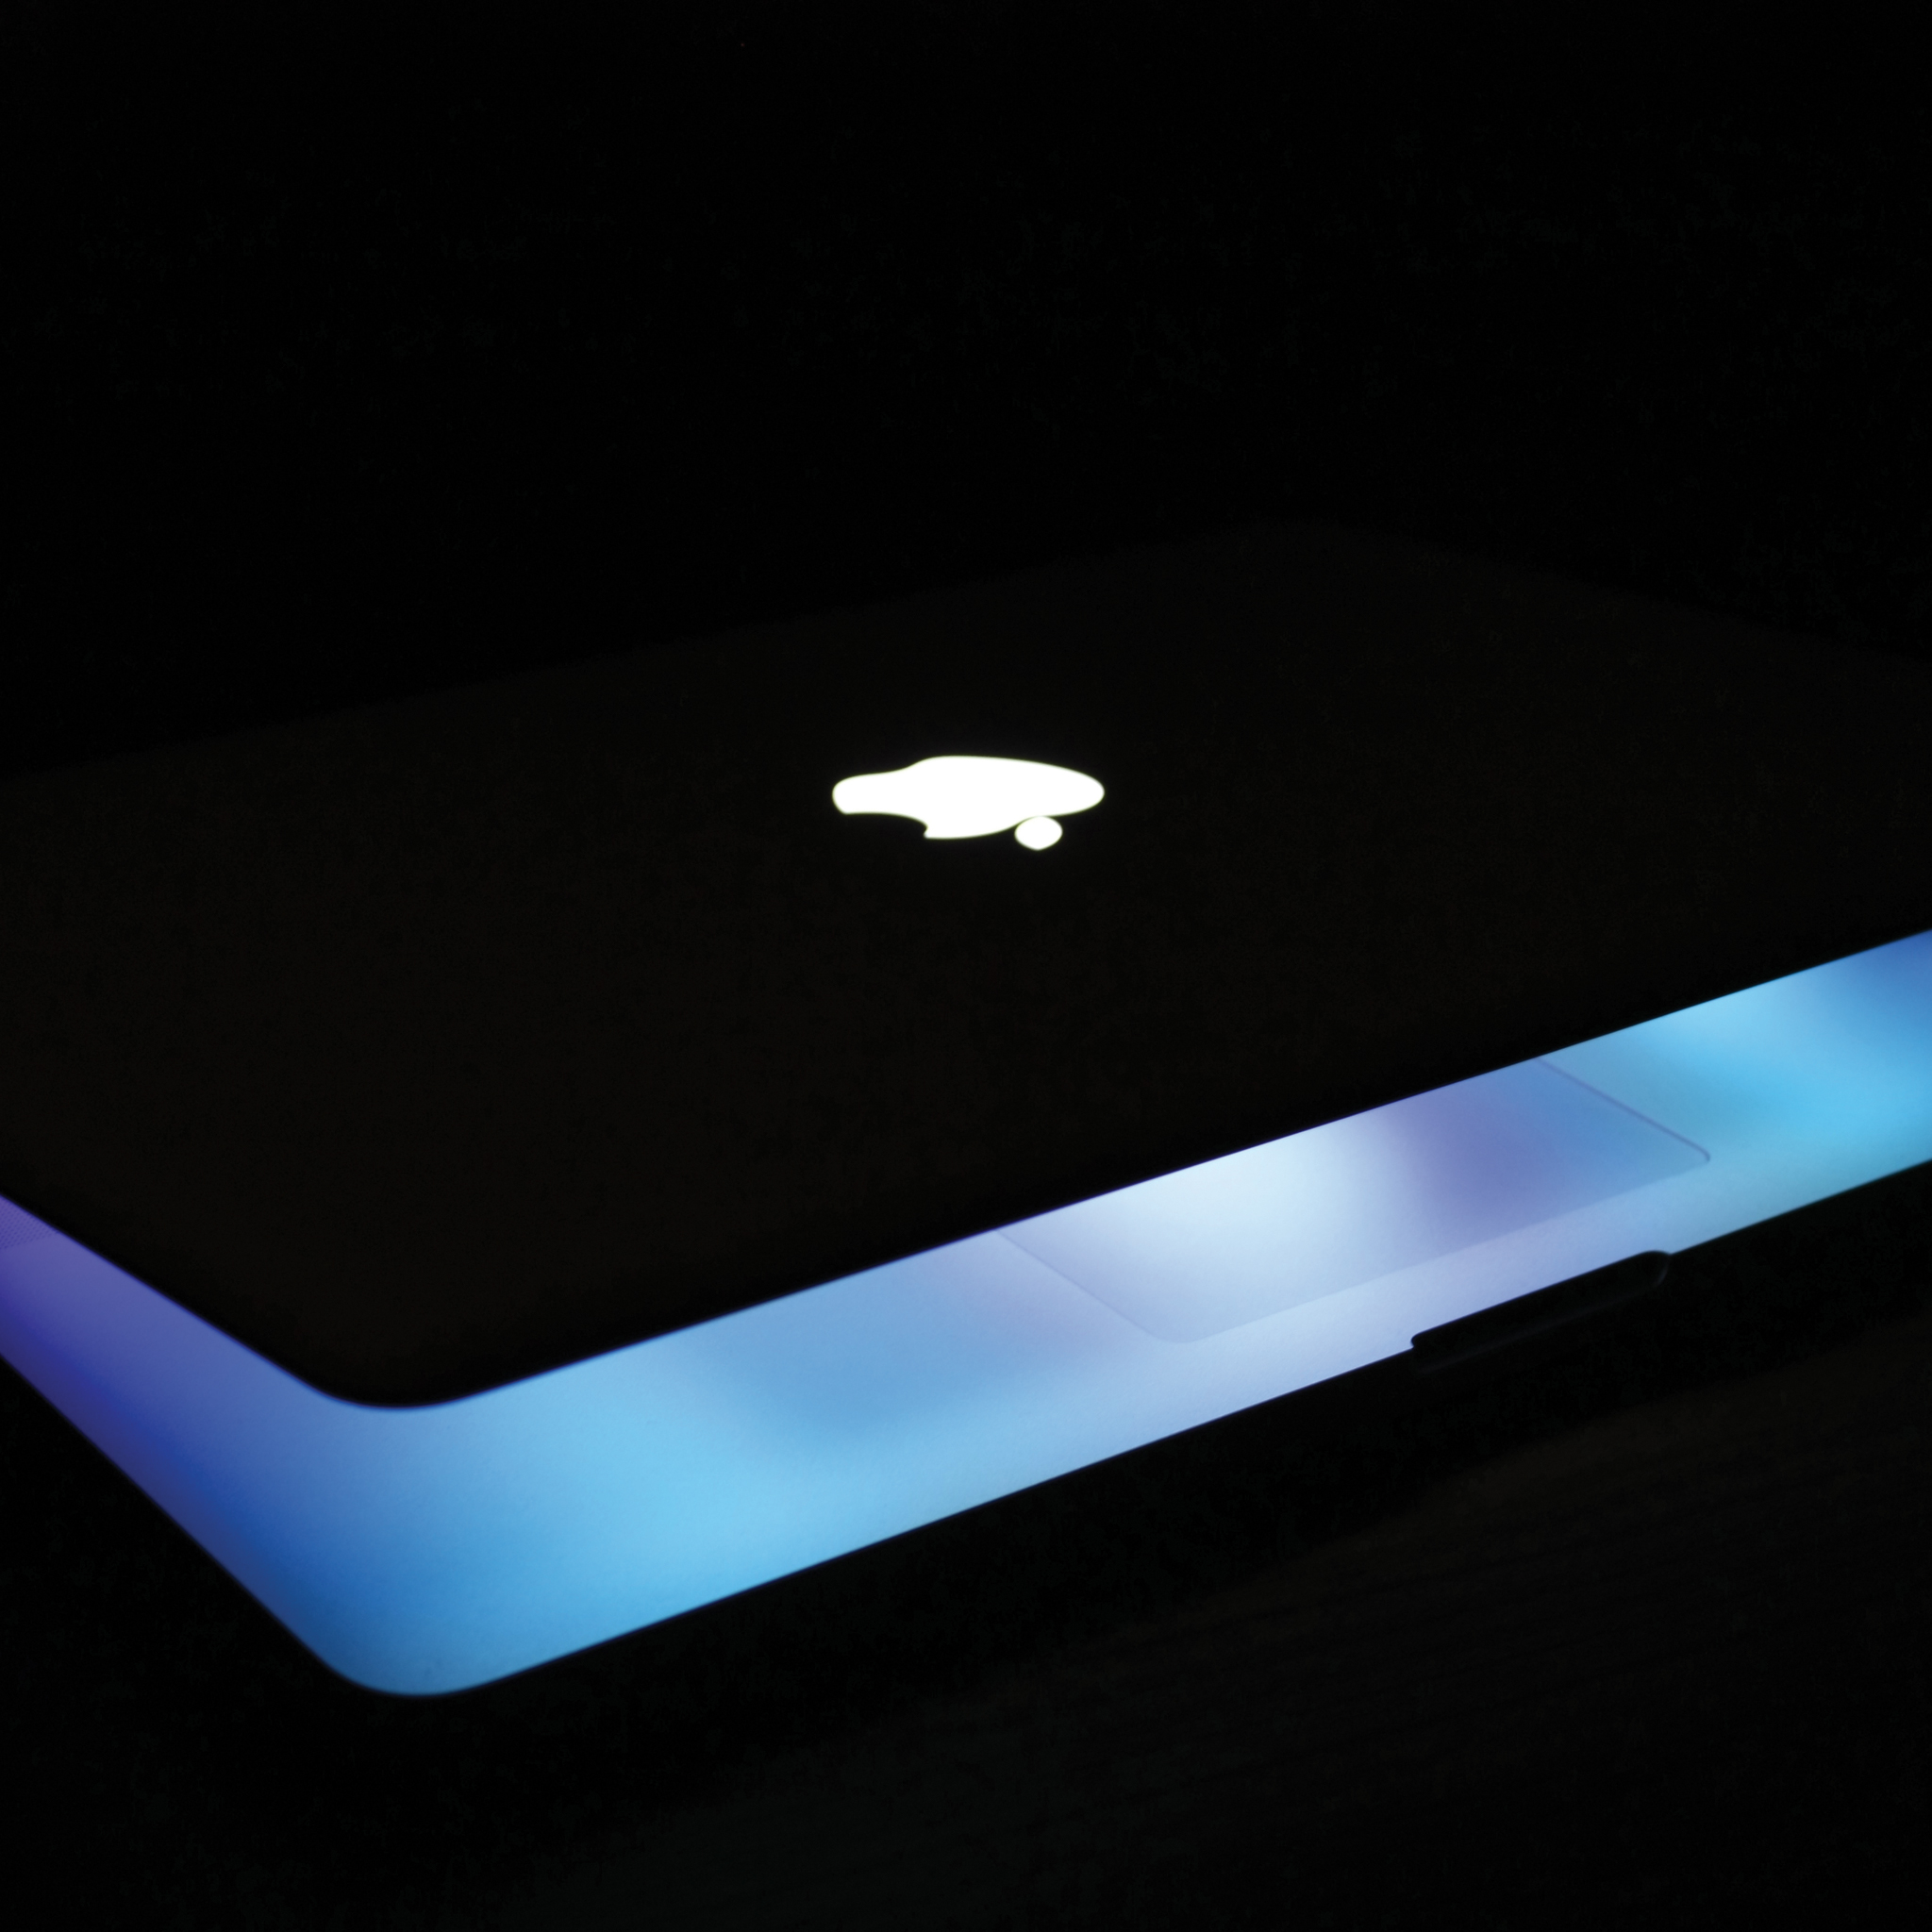 macbook proの壁紙,青い,光,点灯,ガジェット,技術